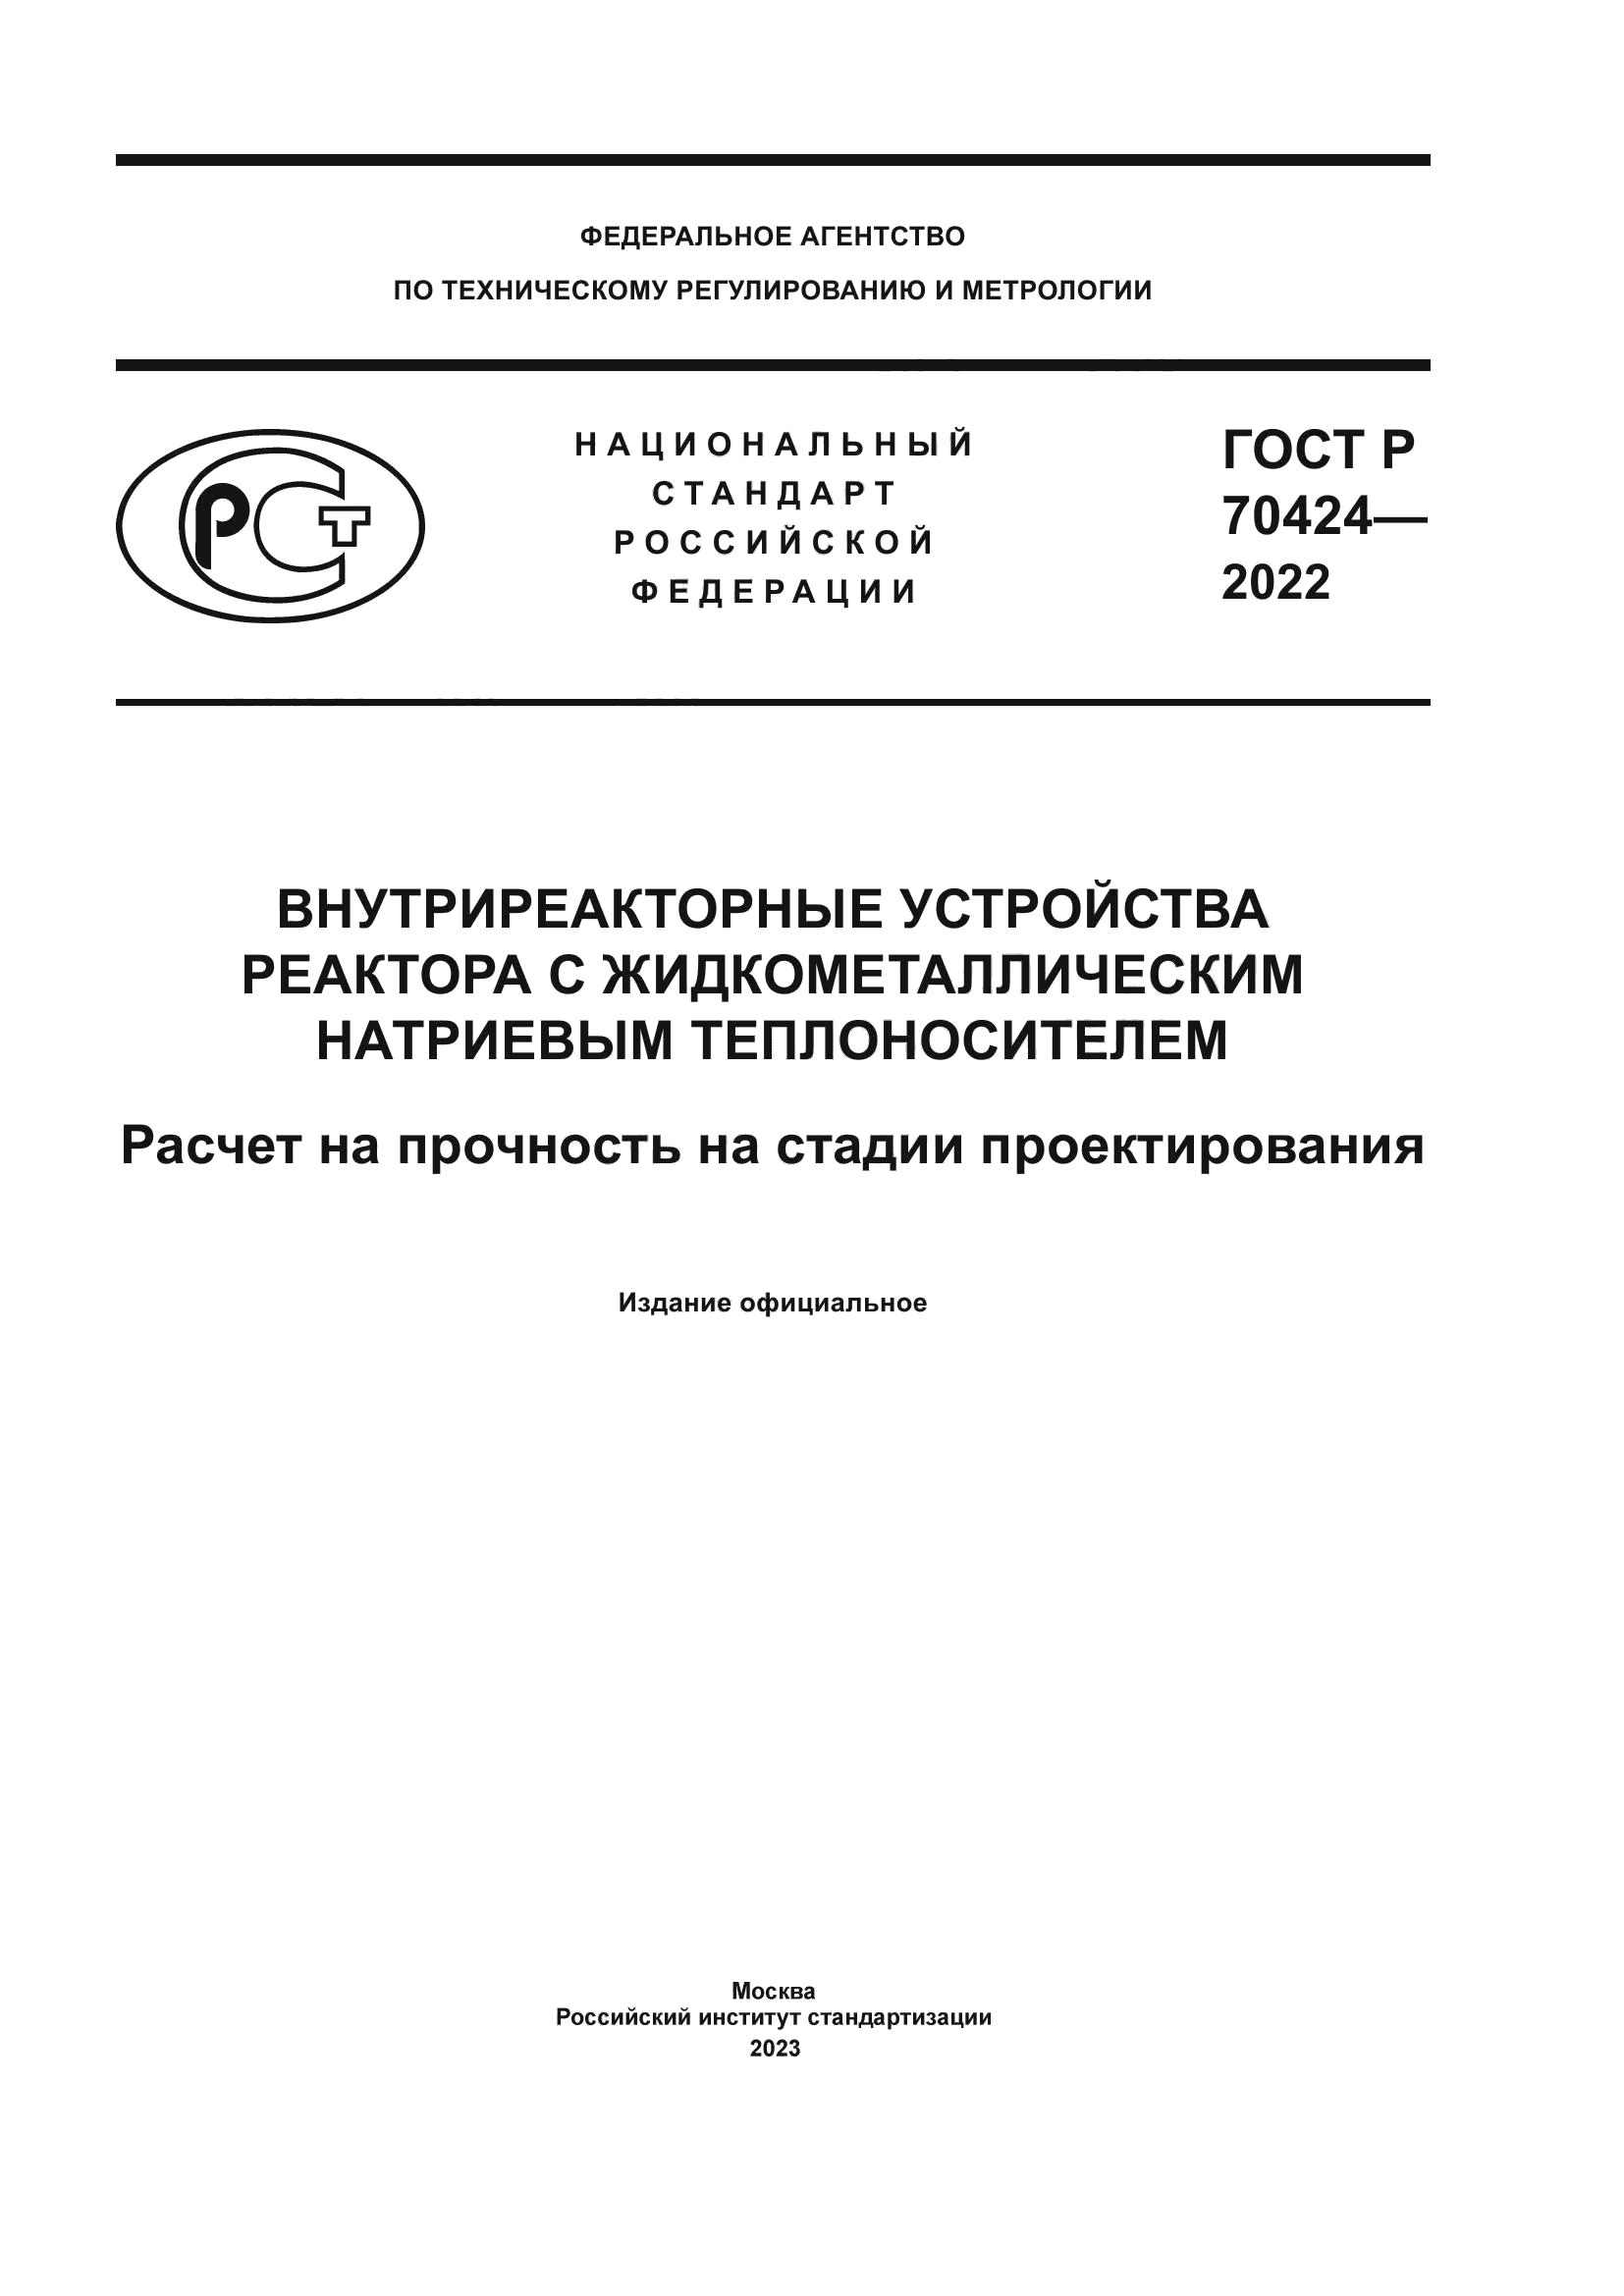 ГОСТ Р 70424-2022